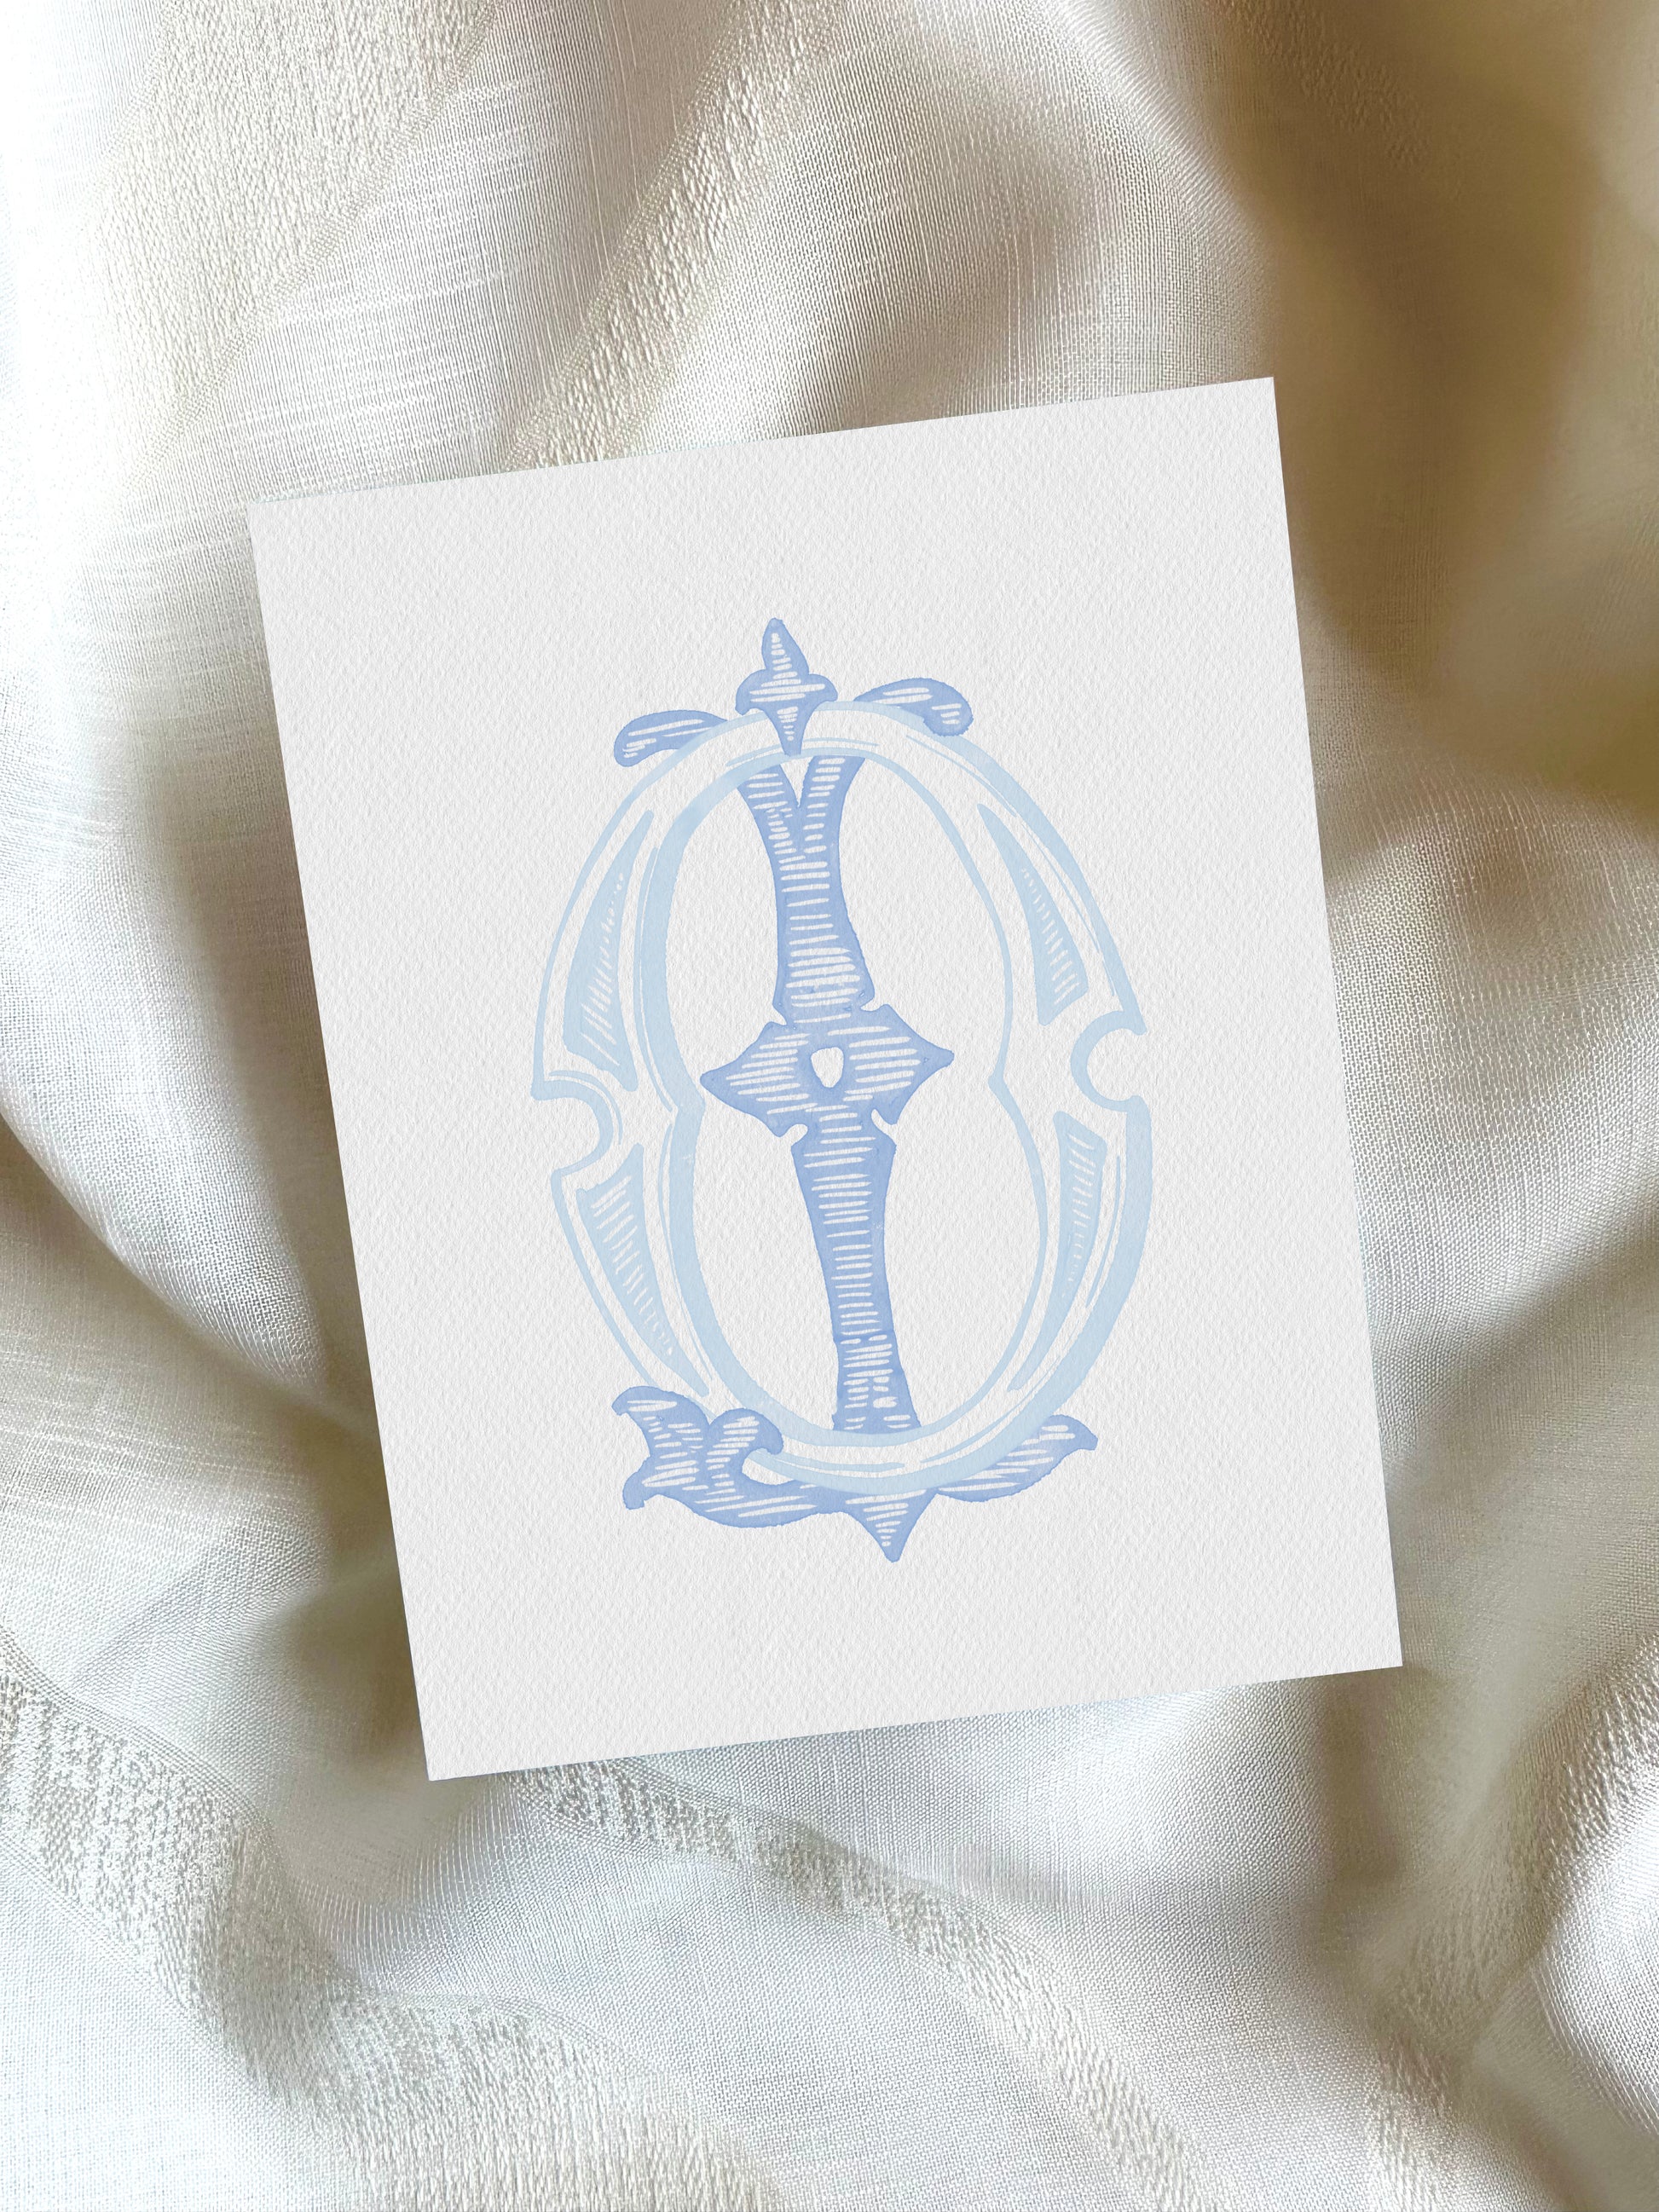 2 Letter Monogram with Letters JO OJ | Digital Download - Wedding Monogram SVG, Personal Logo, Wedding Logo for Wedding Invitations The Wedding Crest Lab